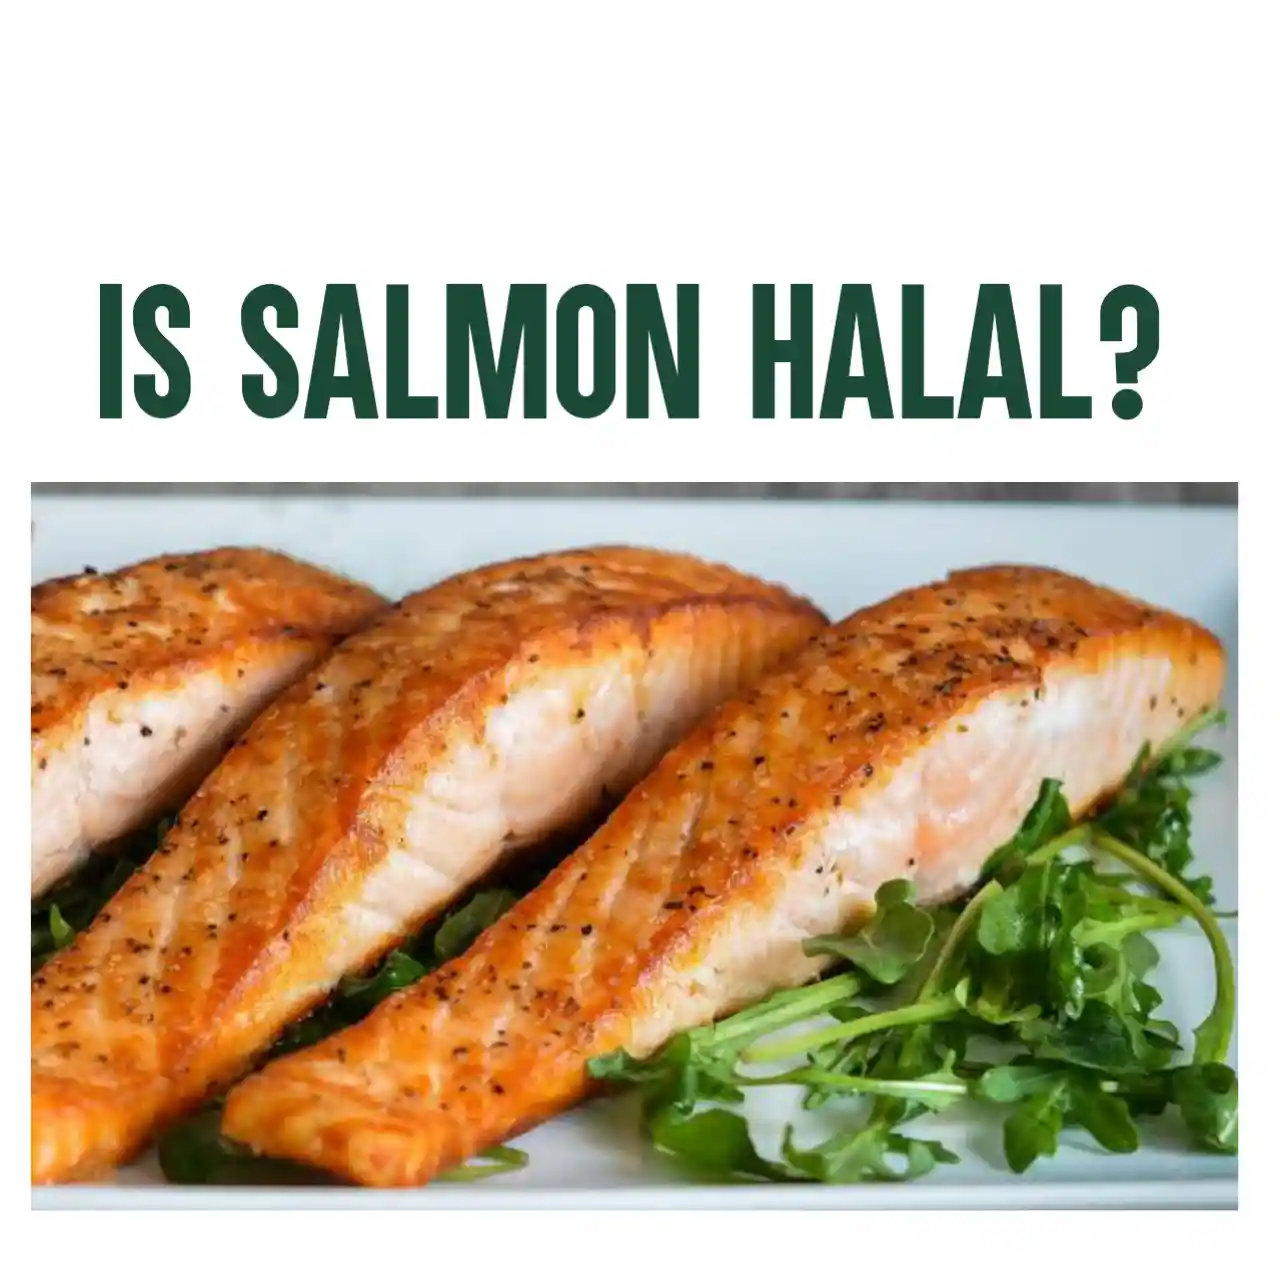 Is Salmon Halal